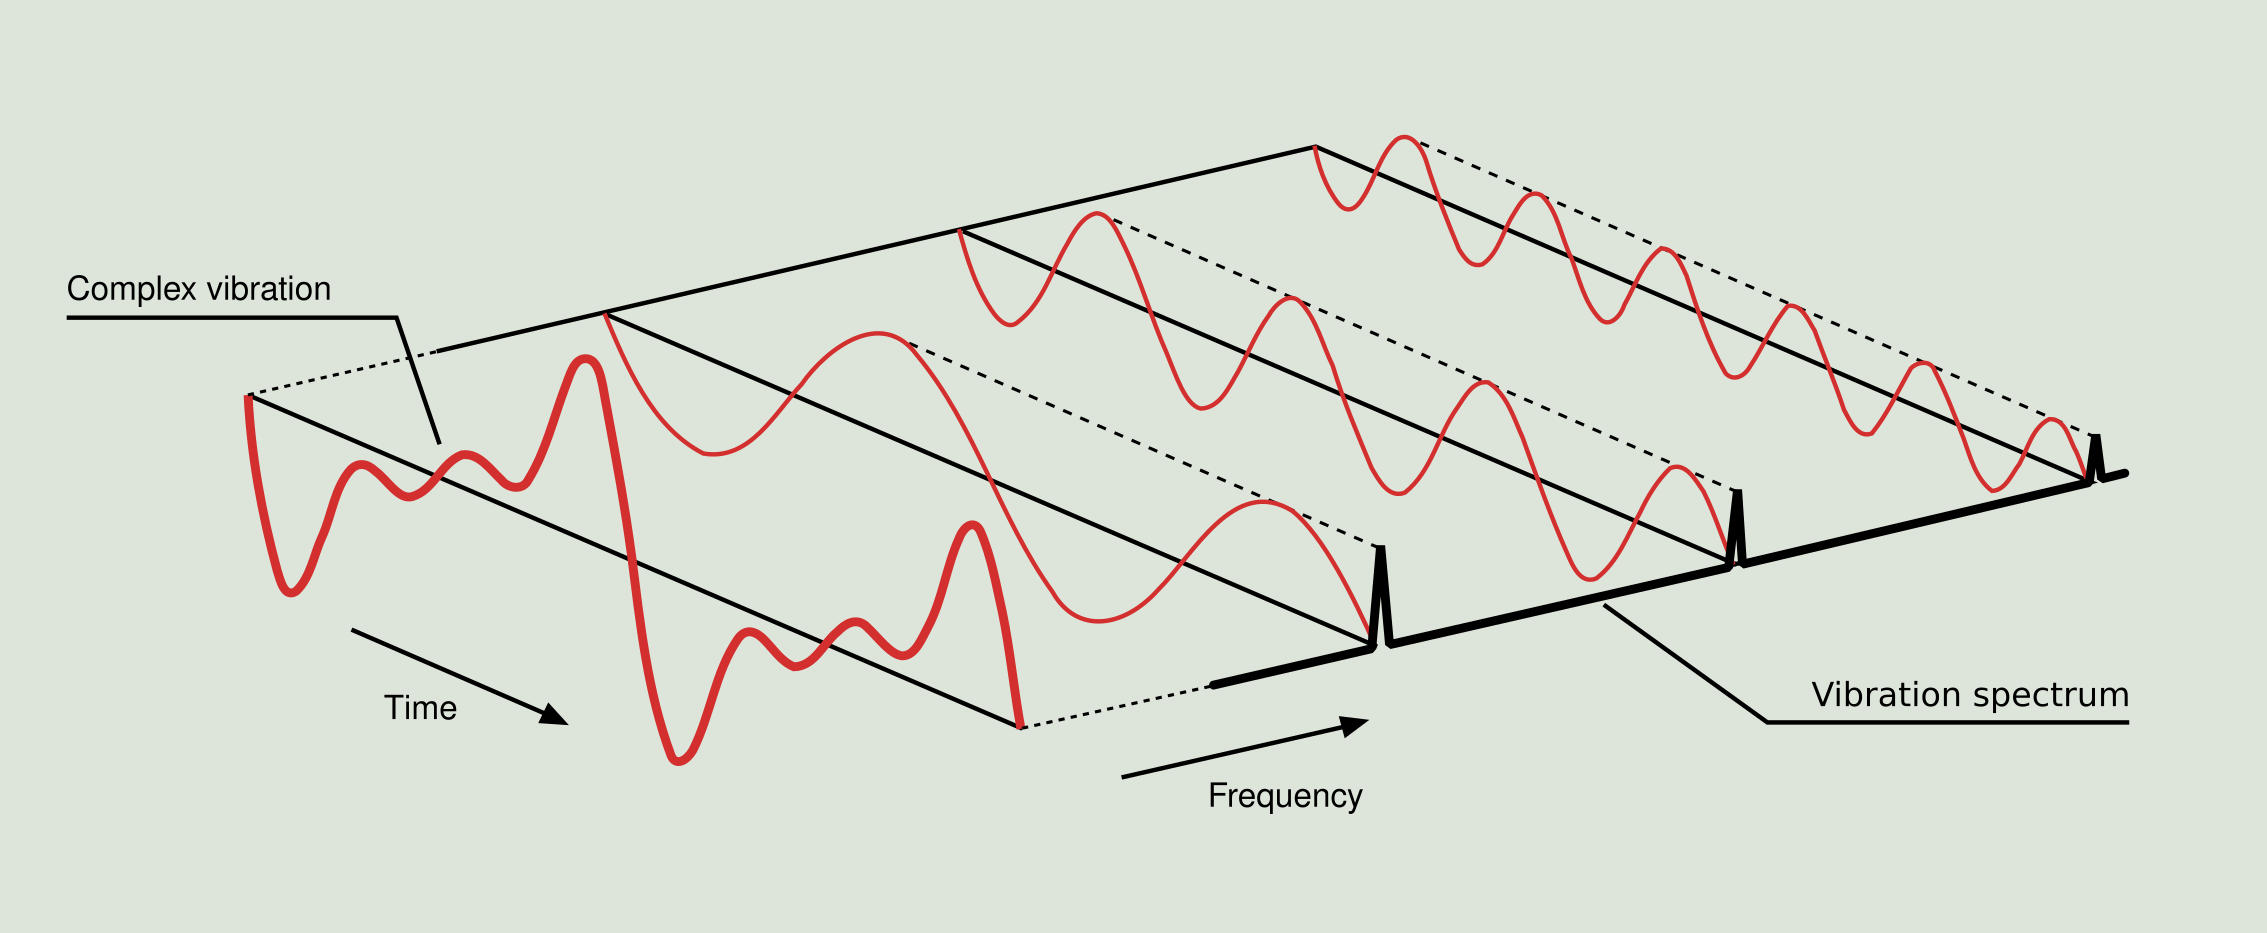 Figure 2.9: FFT processing of a complex vibration signal